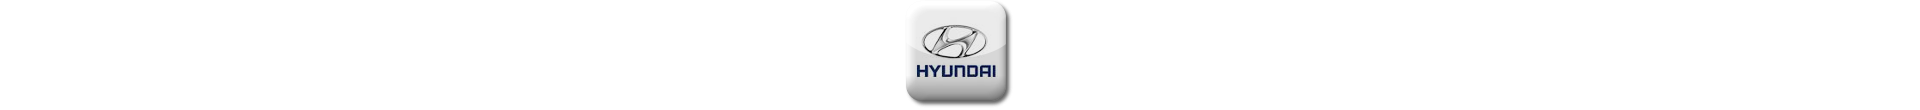 Boitier additionnel Hyundai Essence Evolussem